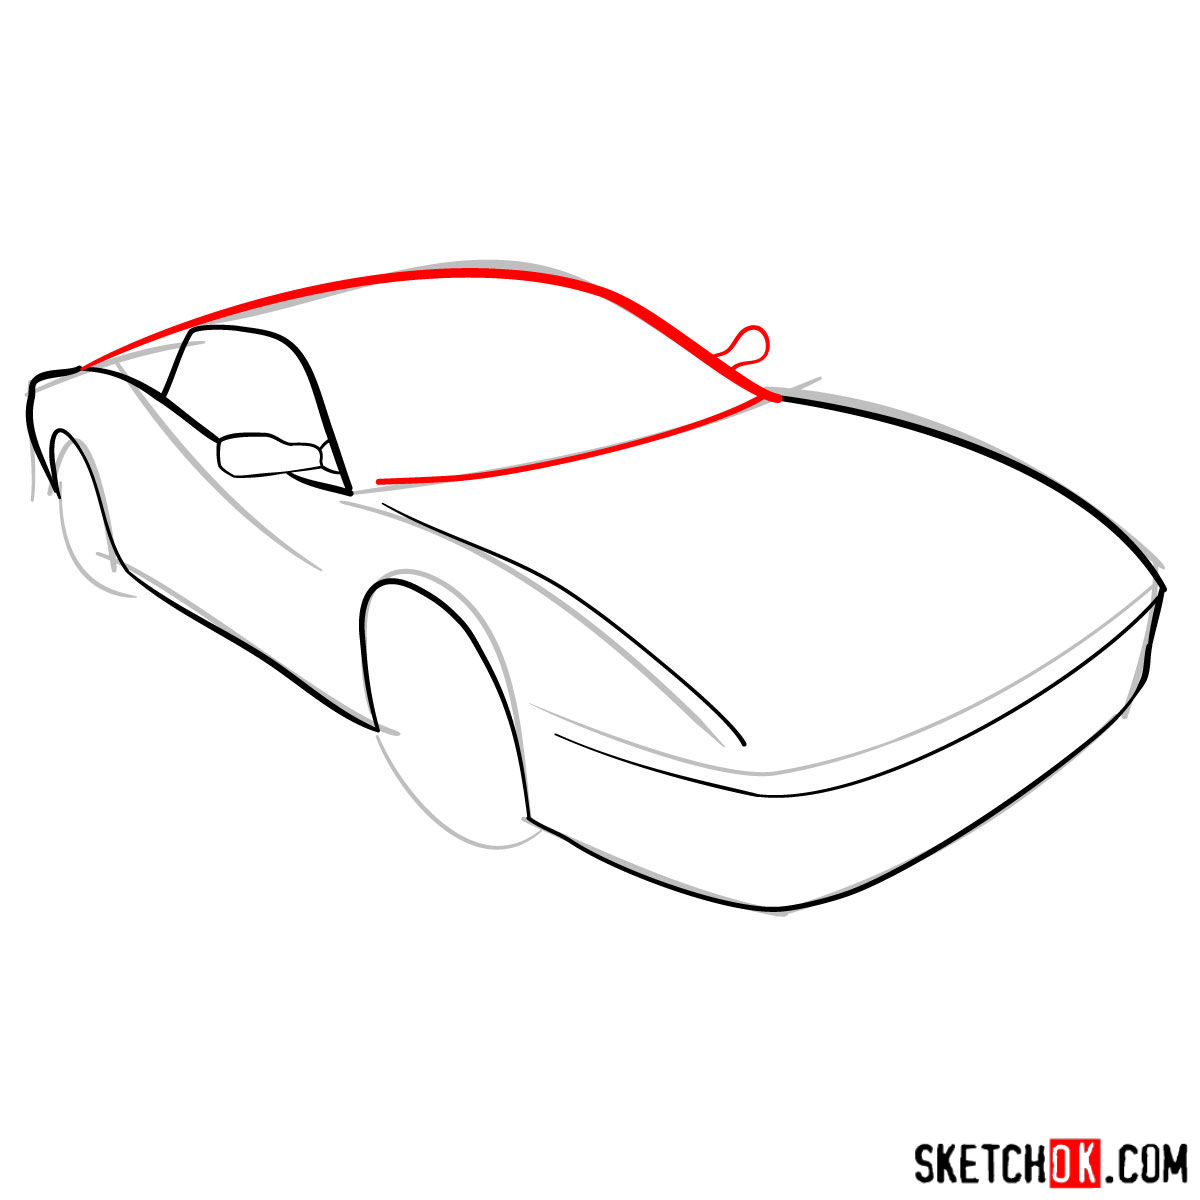 How to draw Ferrari Testarossa supercar - step 05